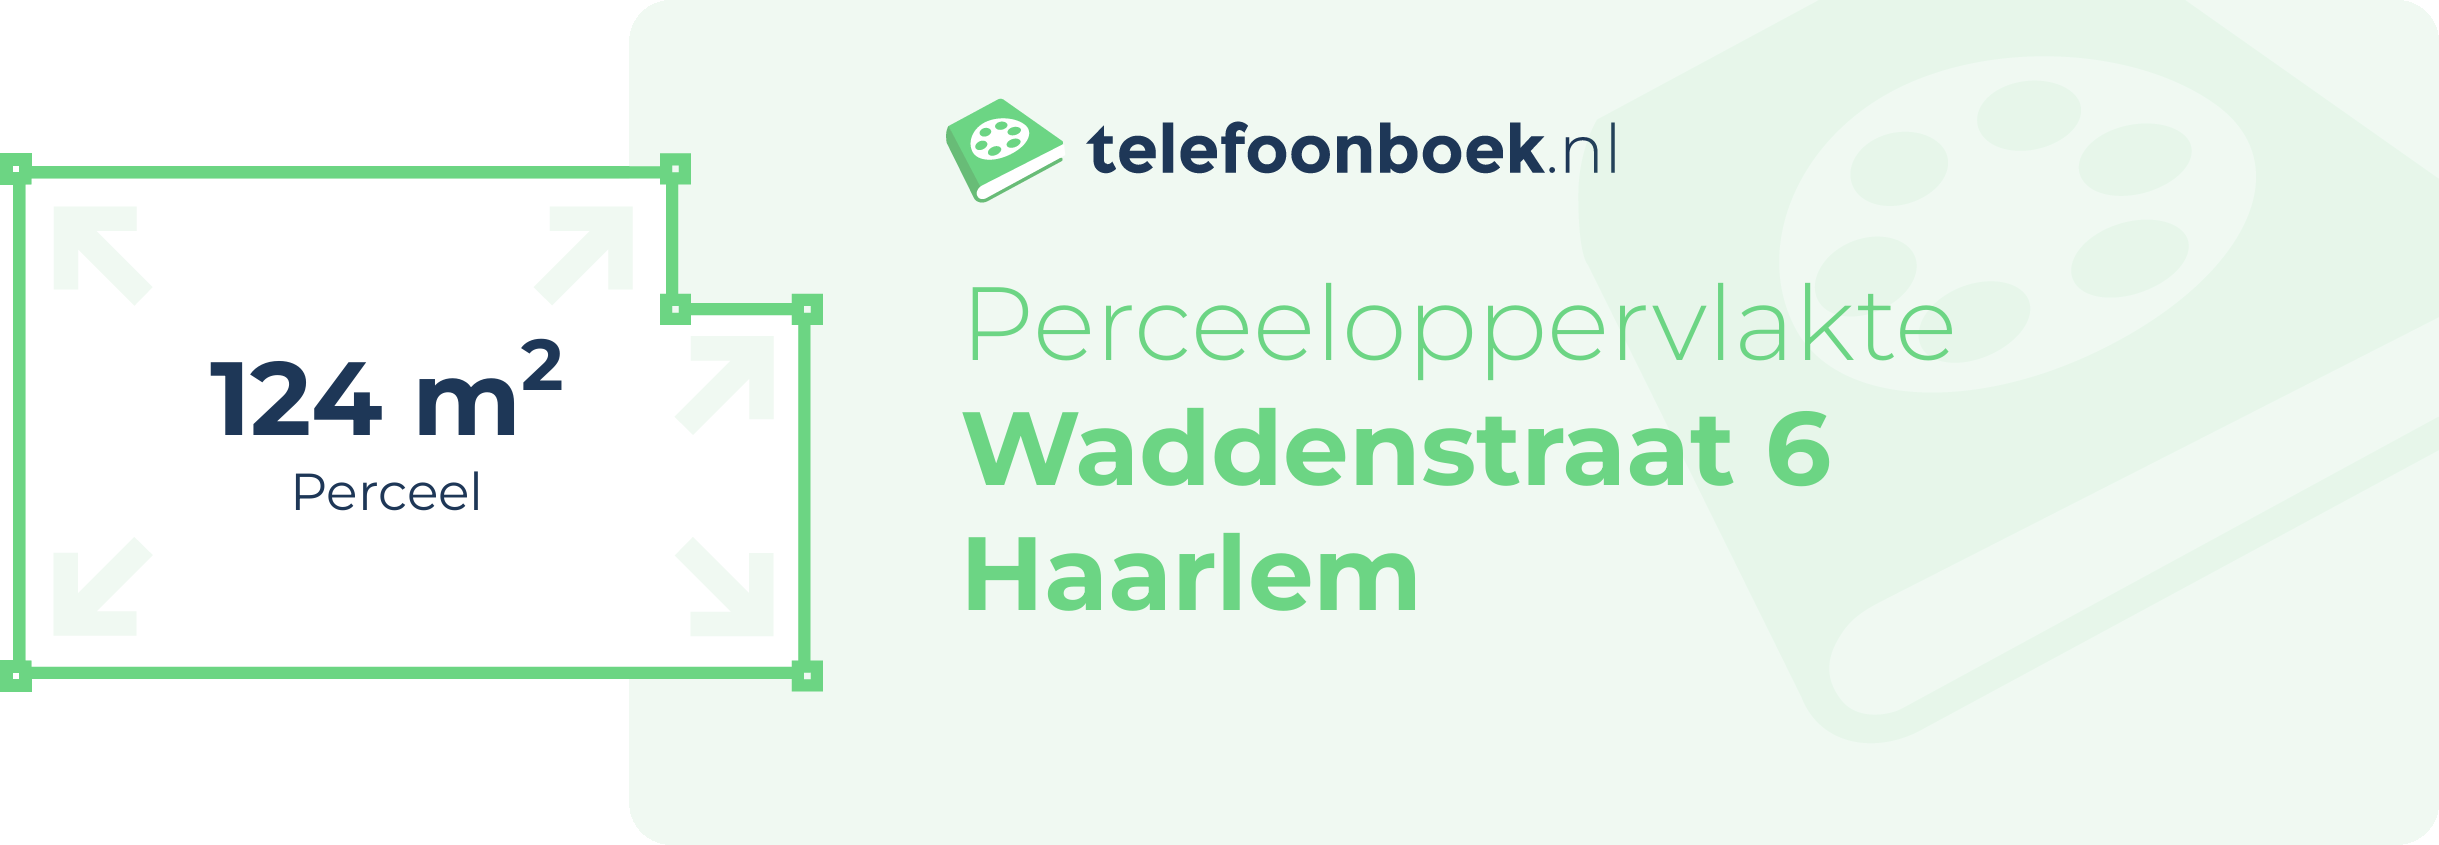 Perceeloppervlakte Waddenstraat 6 Haarlem